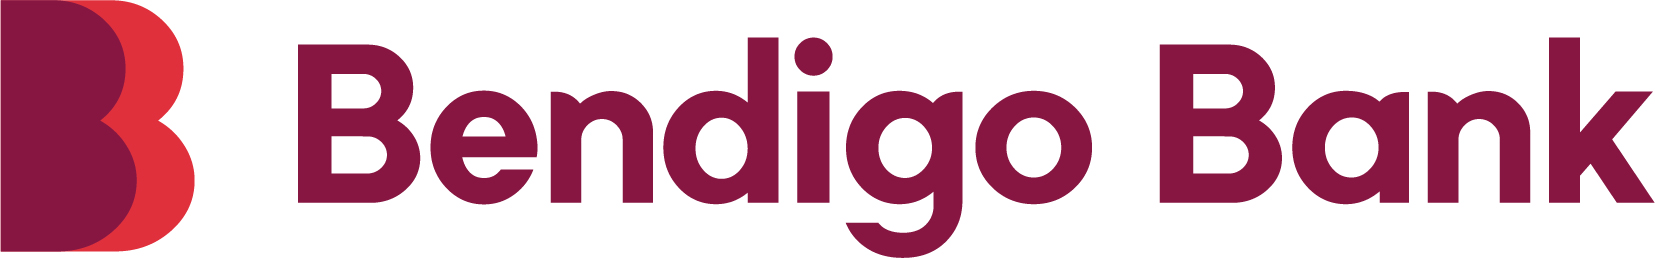 BB-Bendigo Bank Logo-websafe